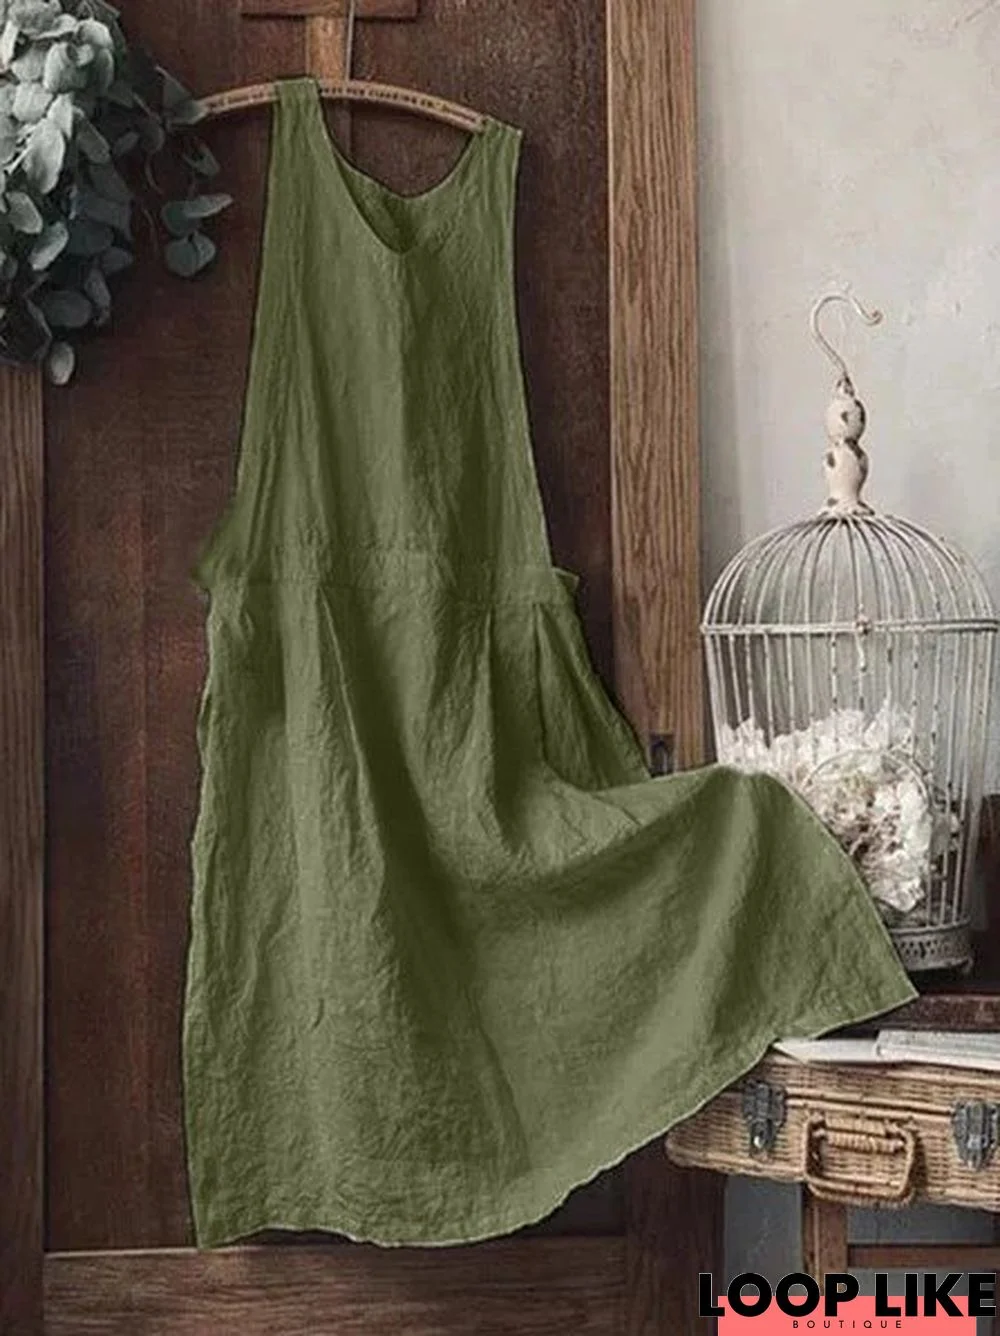 Vintage Plain Sleeveless Casual Weaving Dress